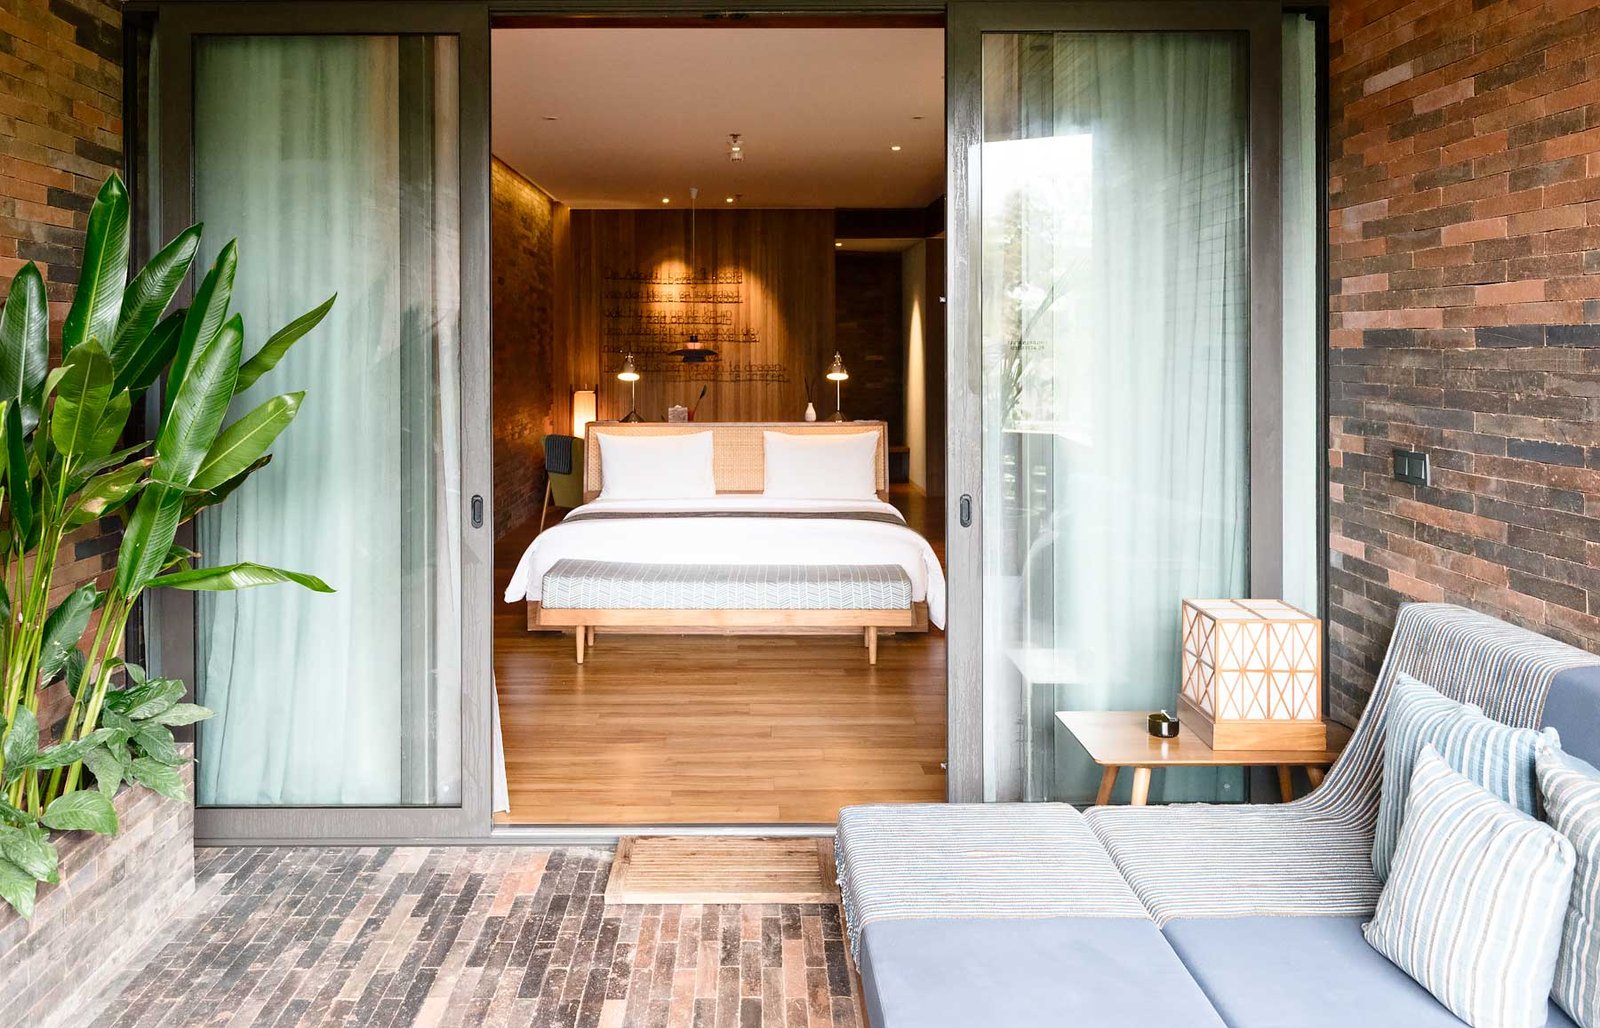 Katamama: Bali’s coolest luxury boutique hotel